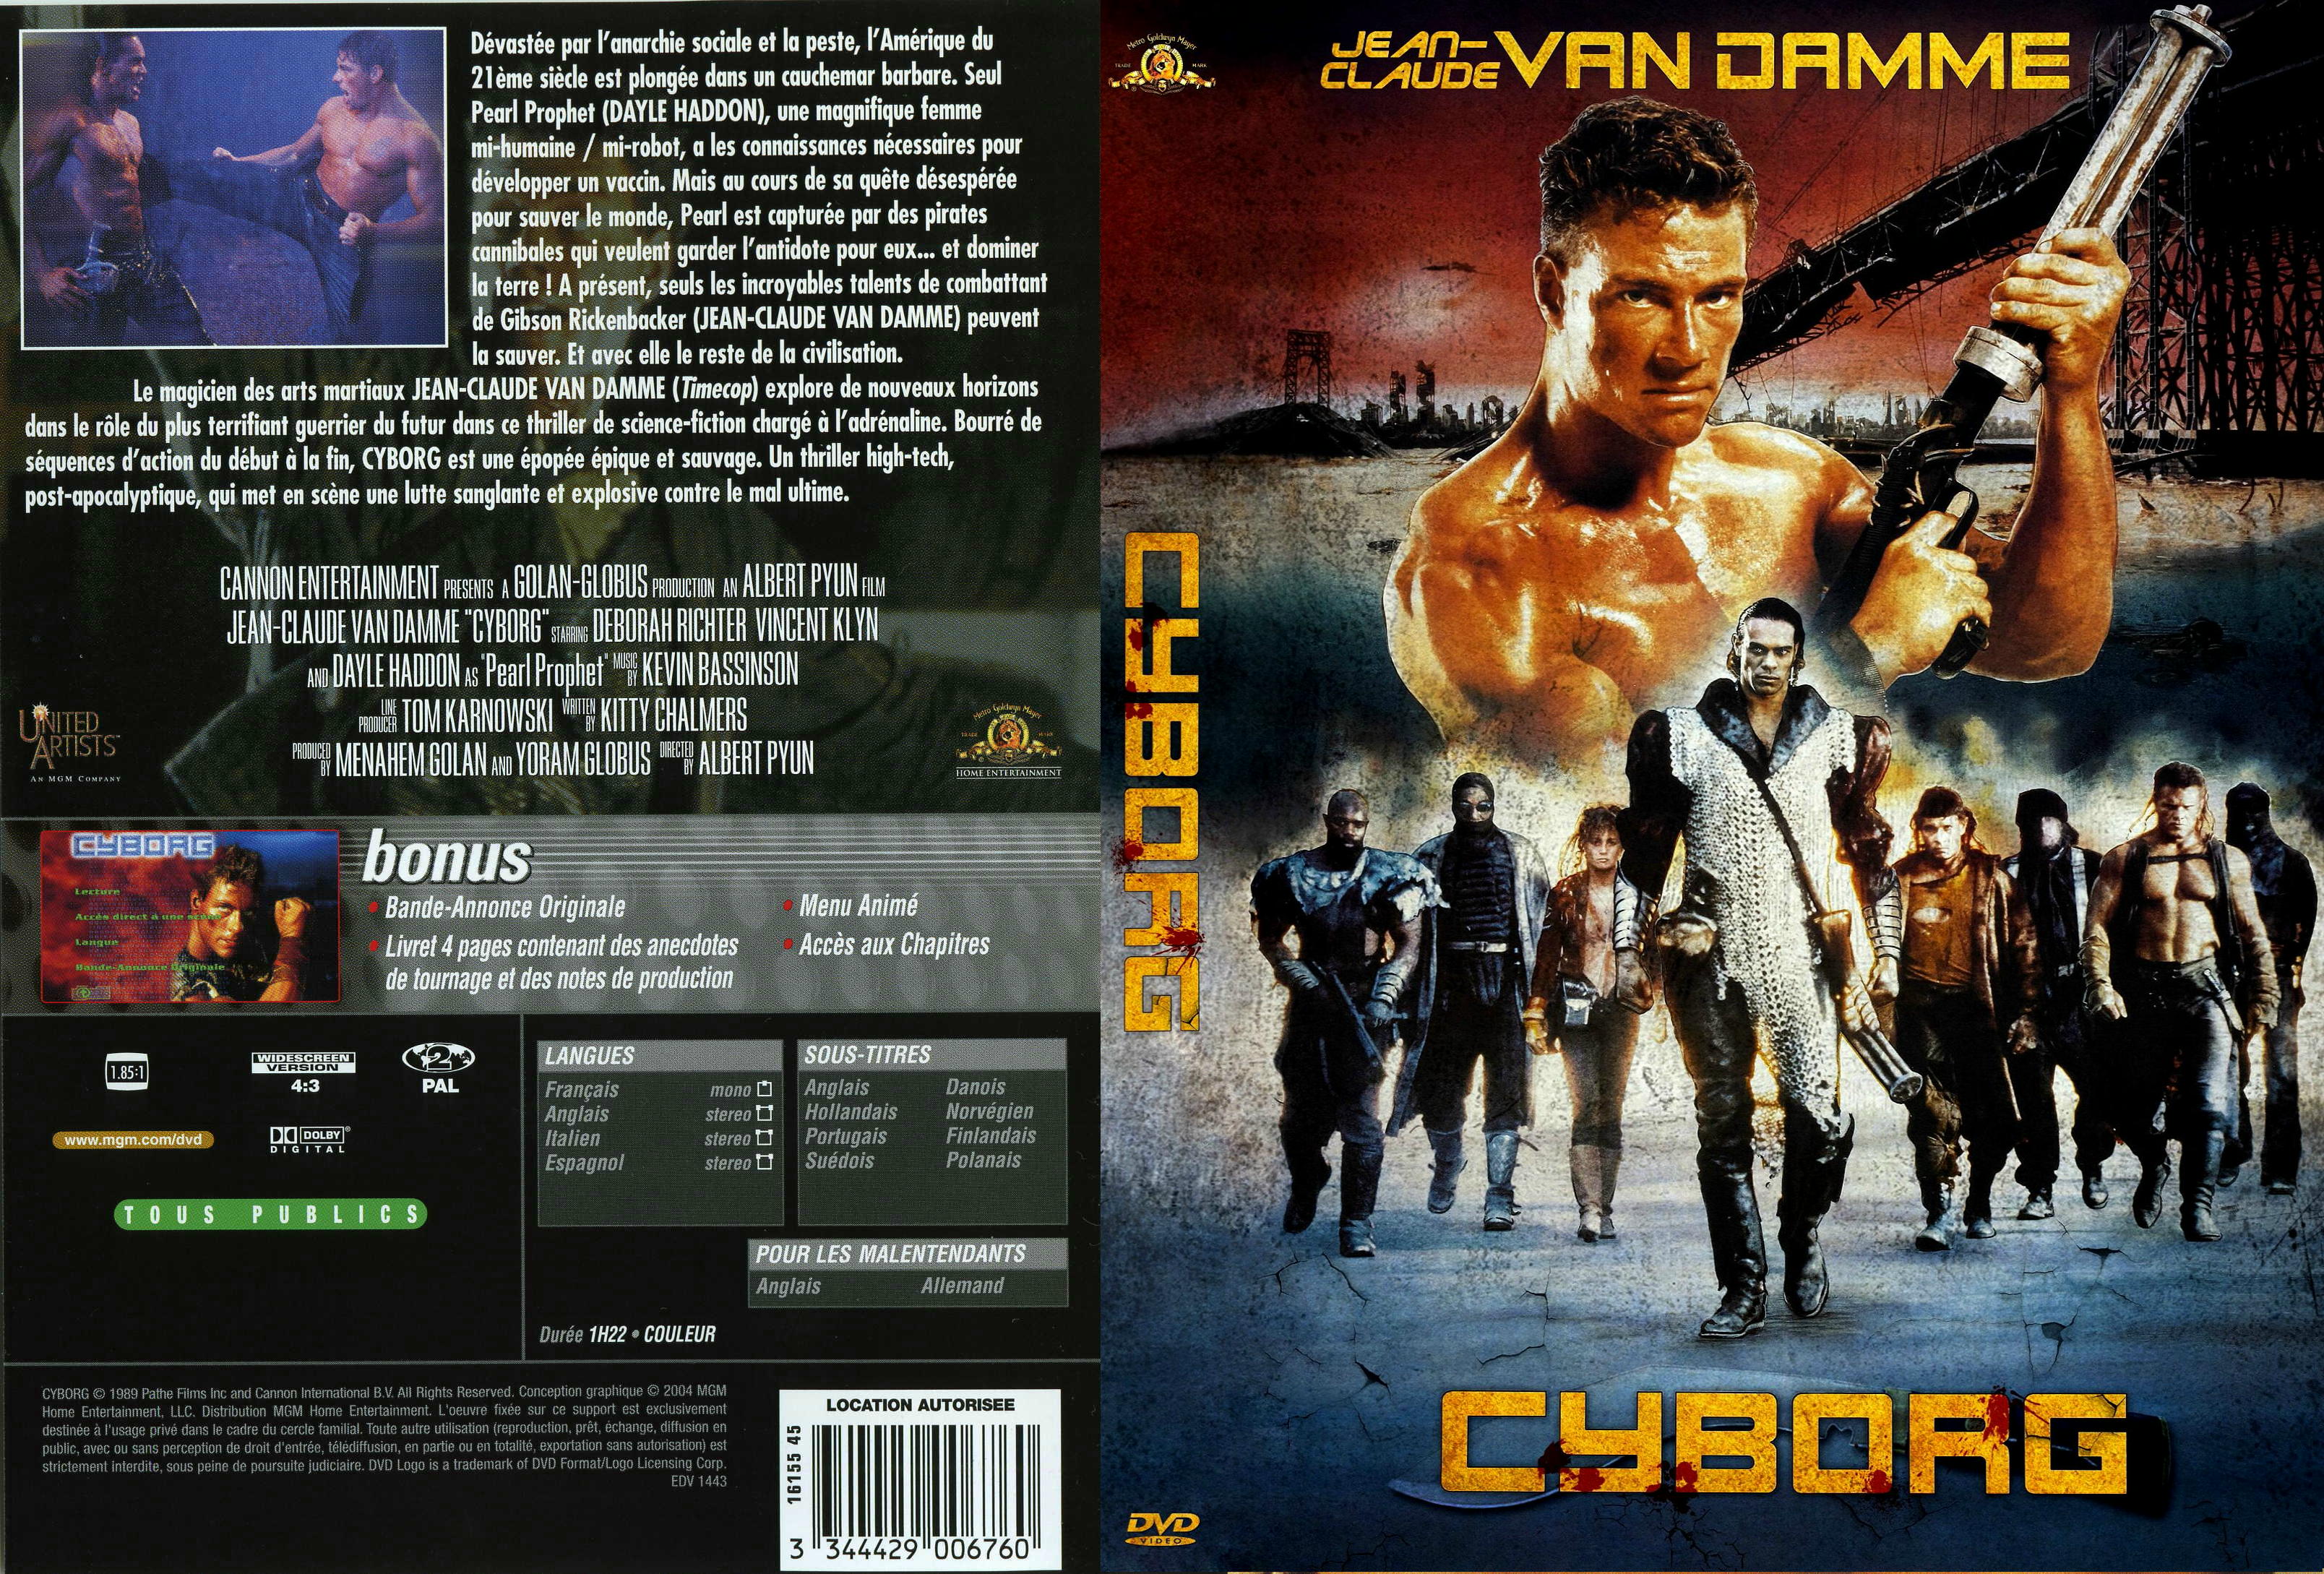 Jaquette DVD Cyborg v4